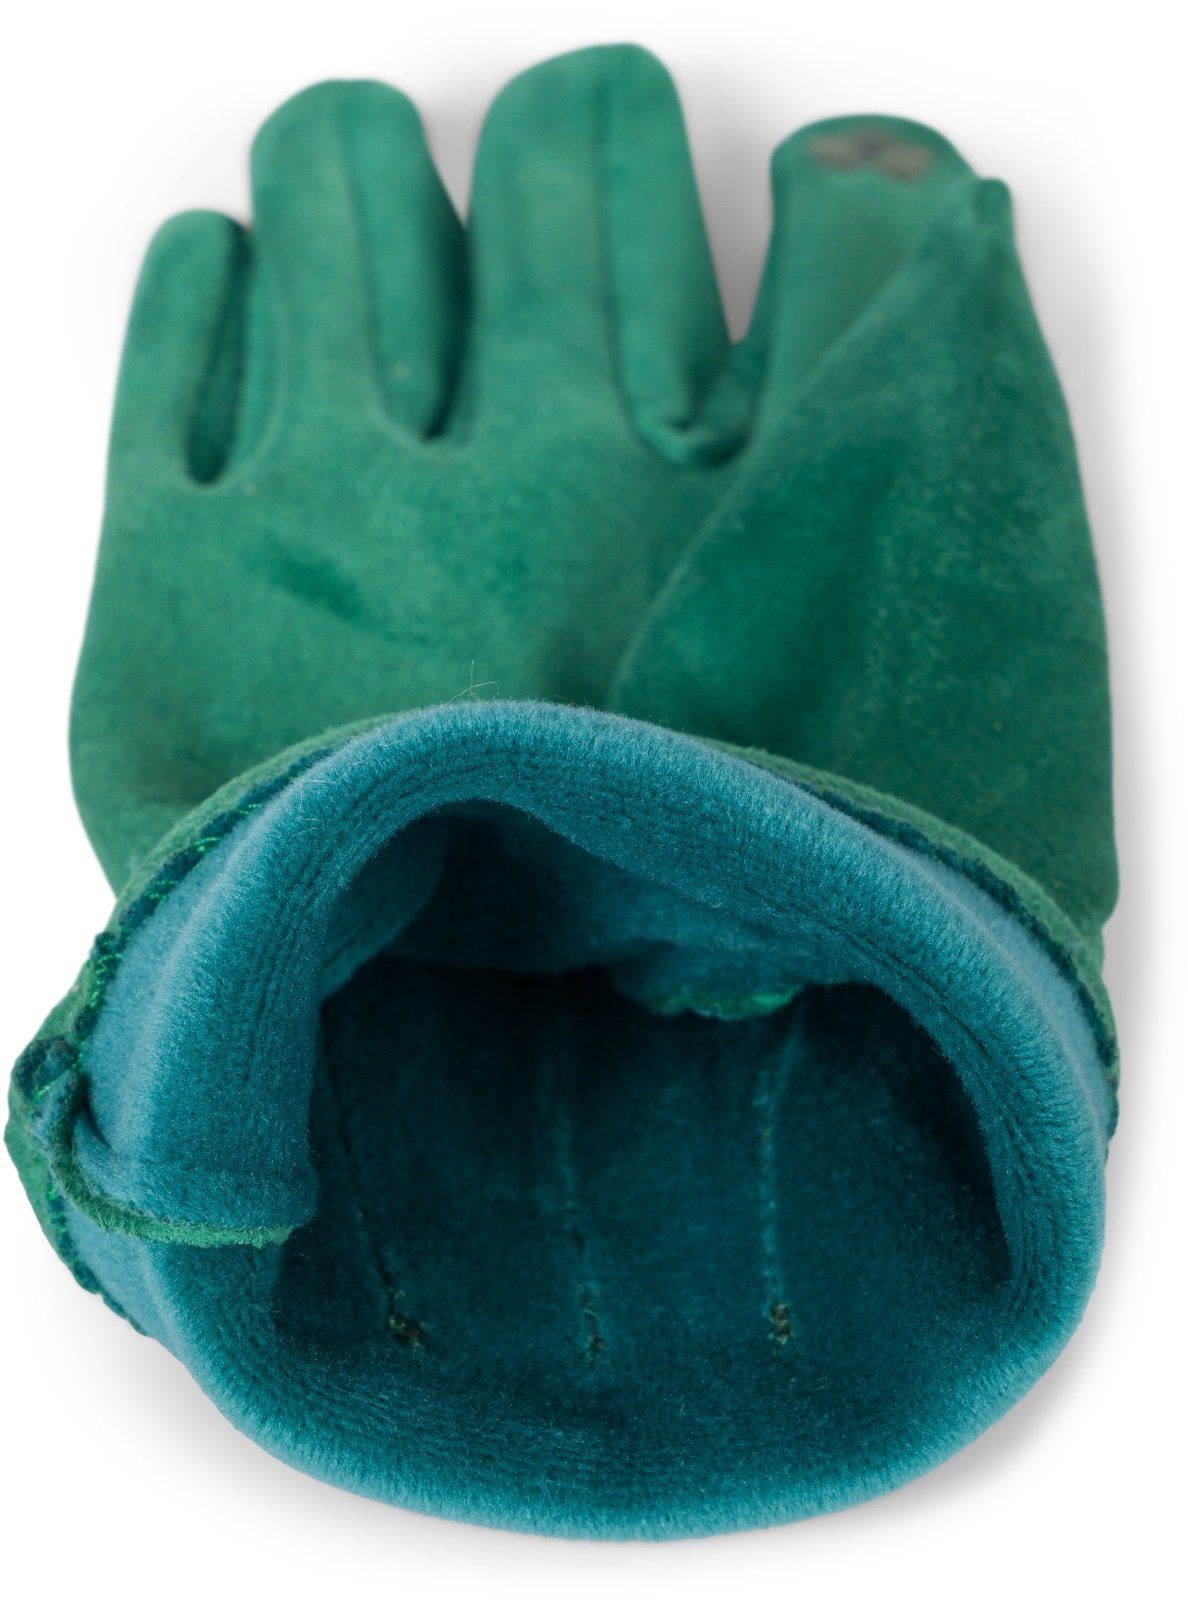 styleBREAKER Fleecehandschuhe Einfarbige Handschuhe Dunkelgrün Ziernähte Touchscreen